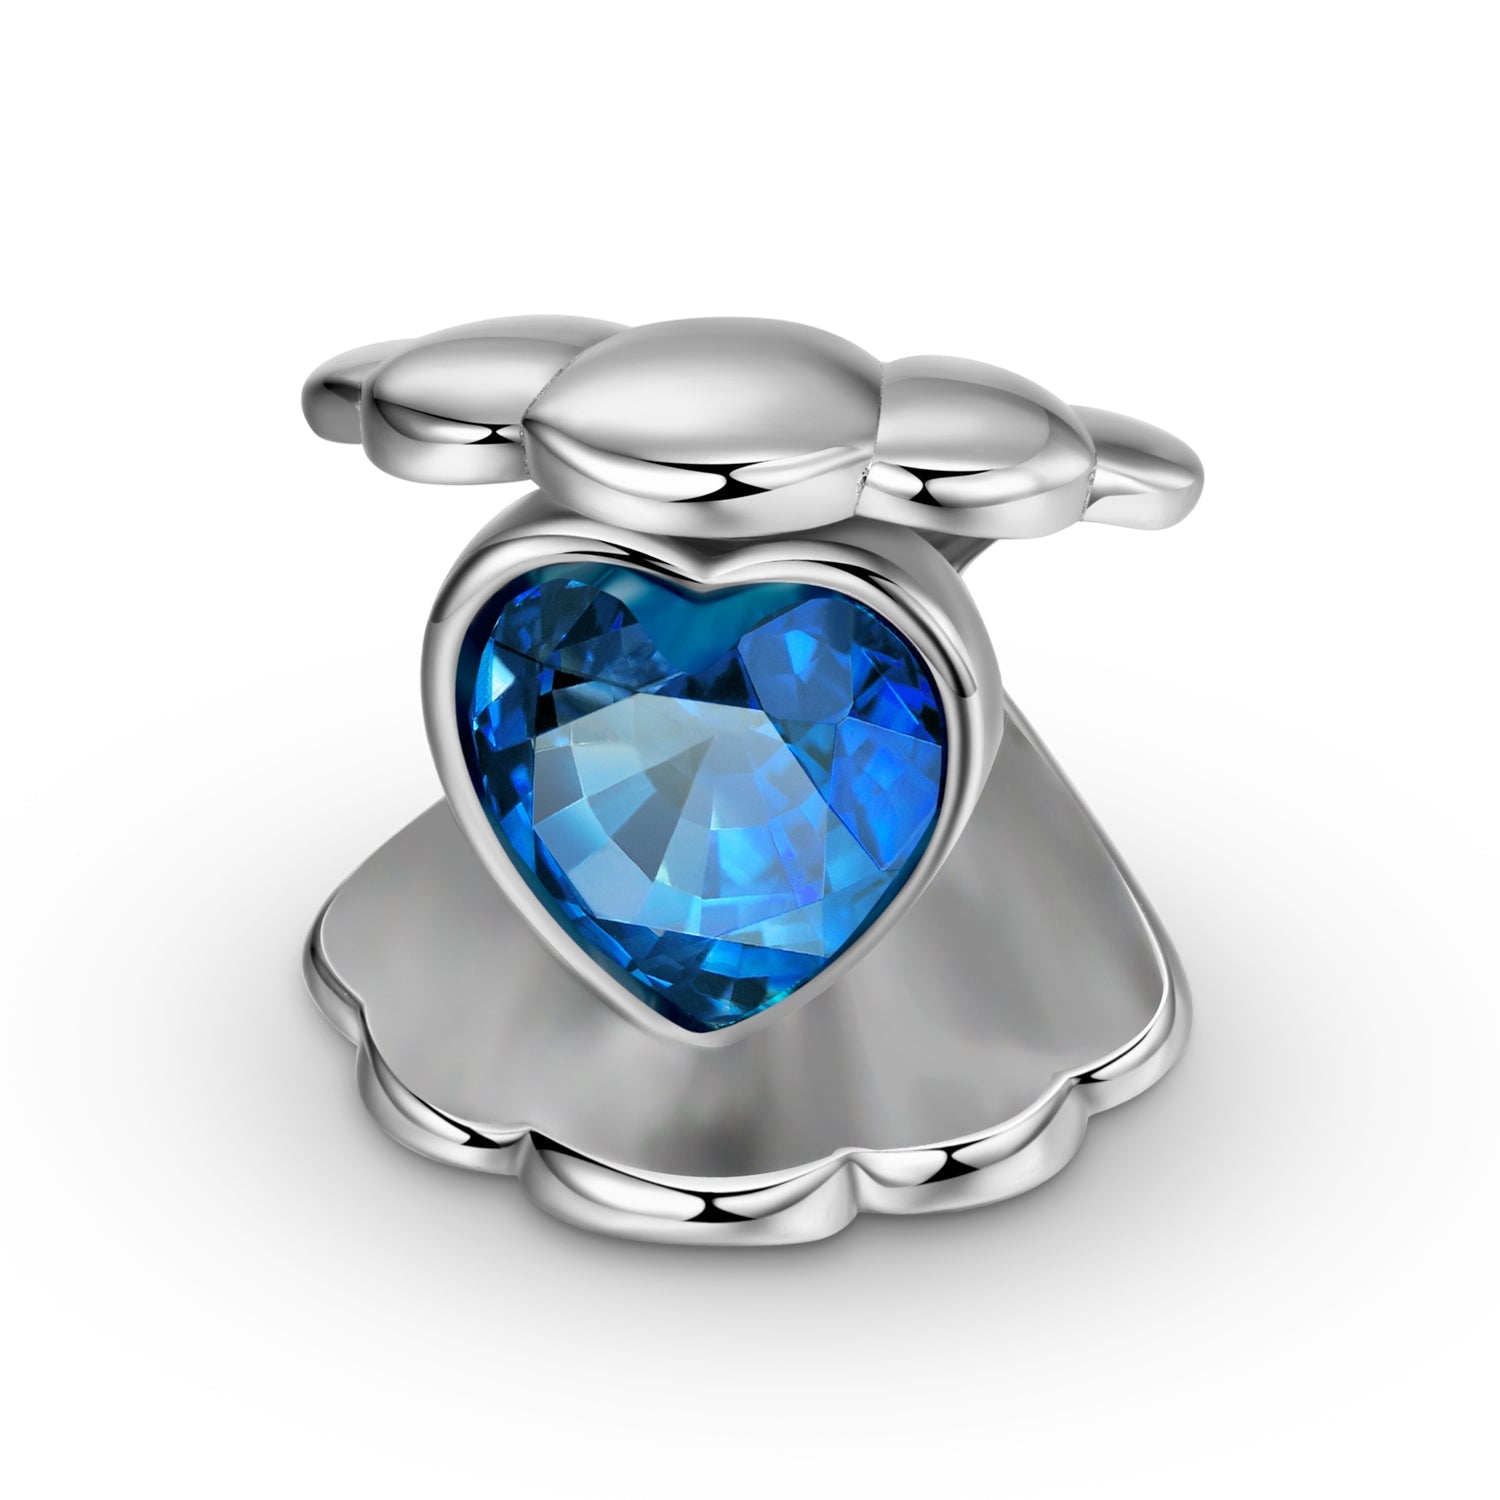 Shell with blue diamond heart